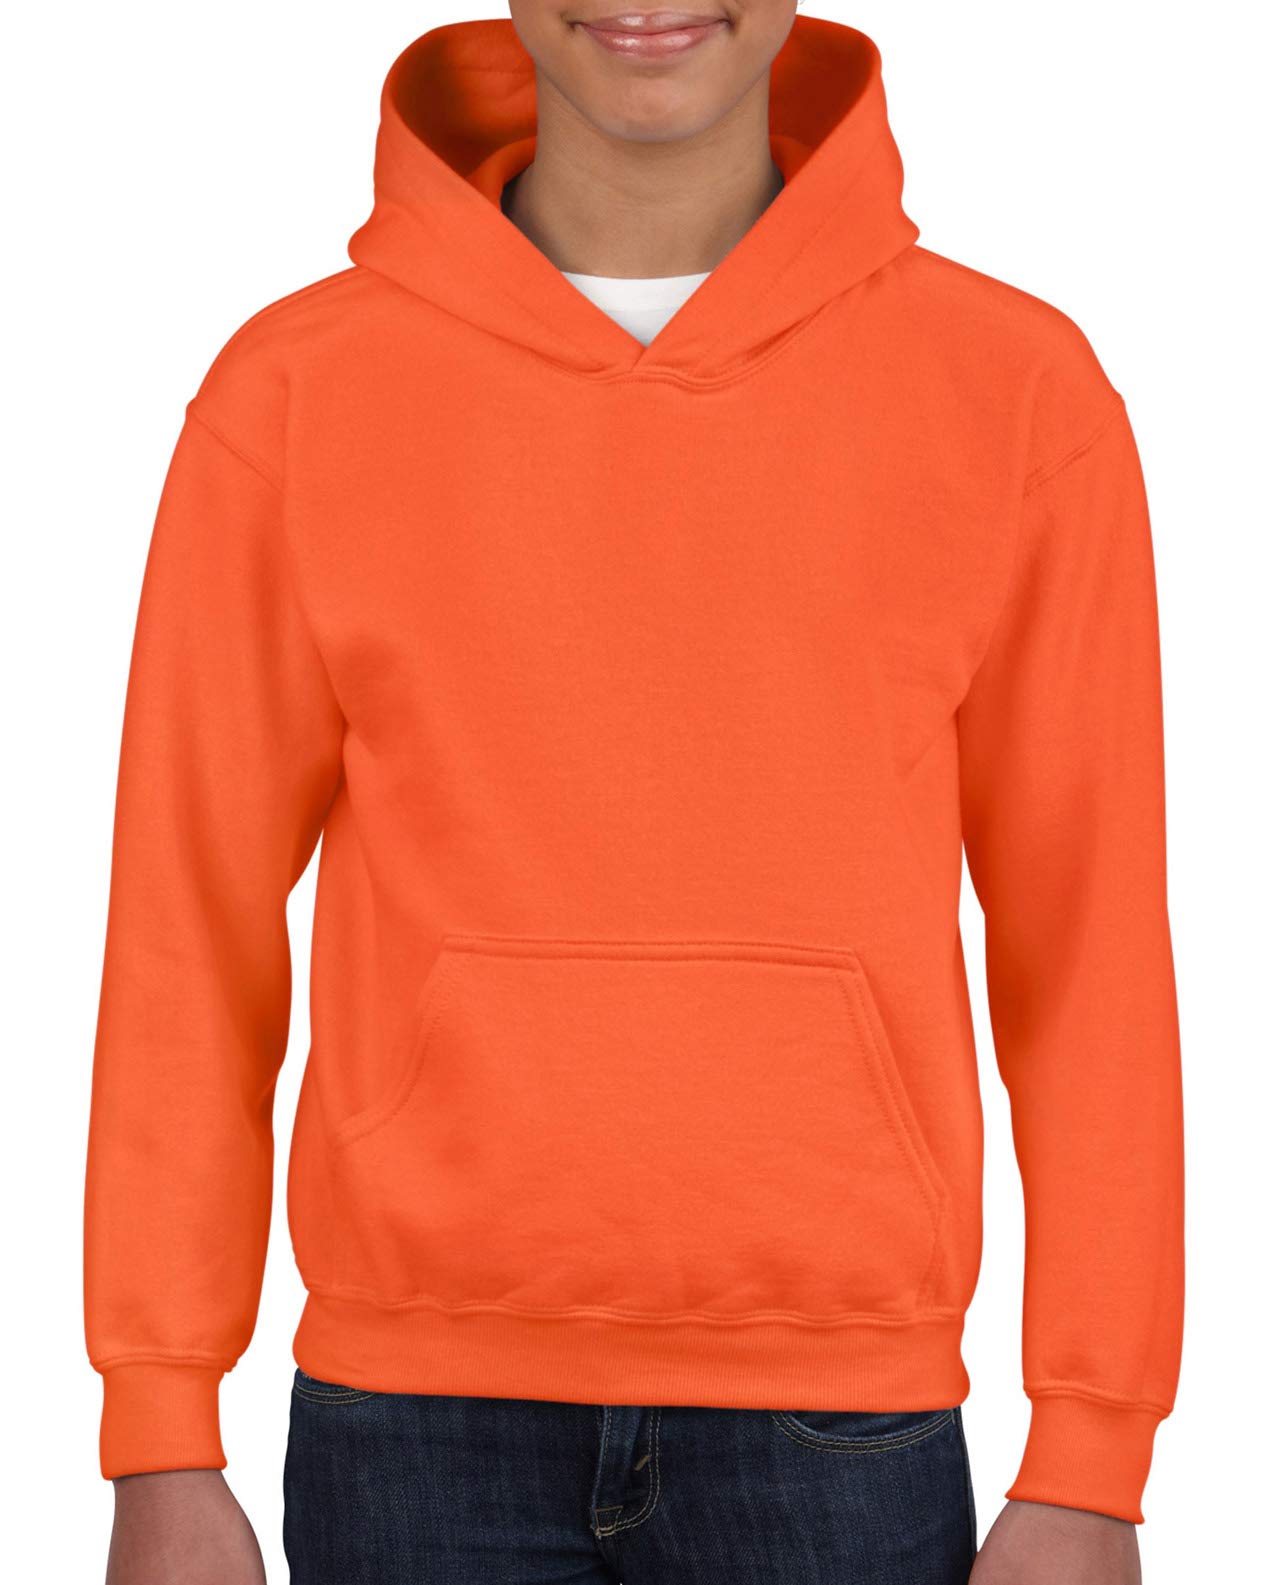 Gildan Boys Heavy Blend Hooded Sweatshirt